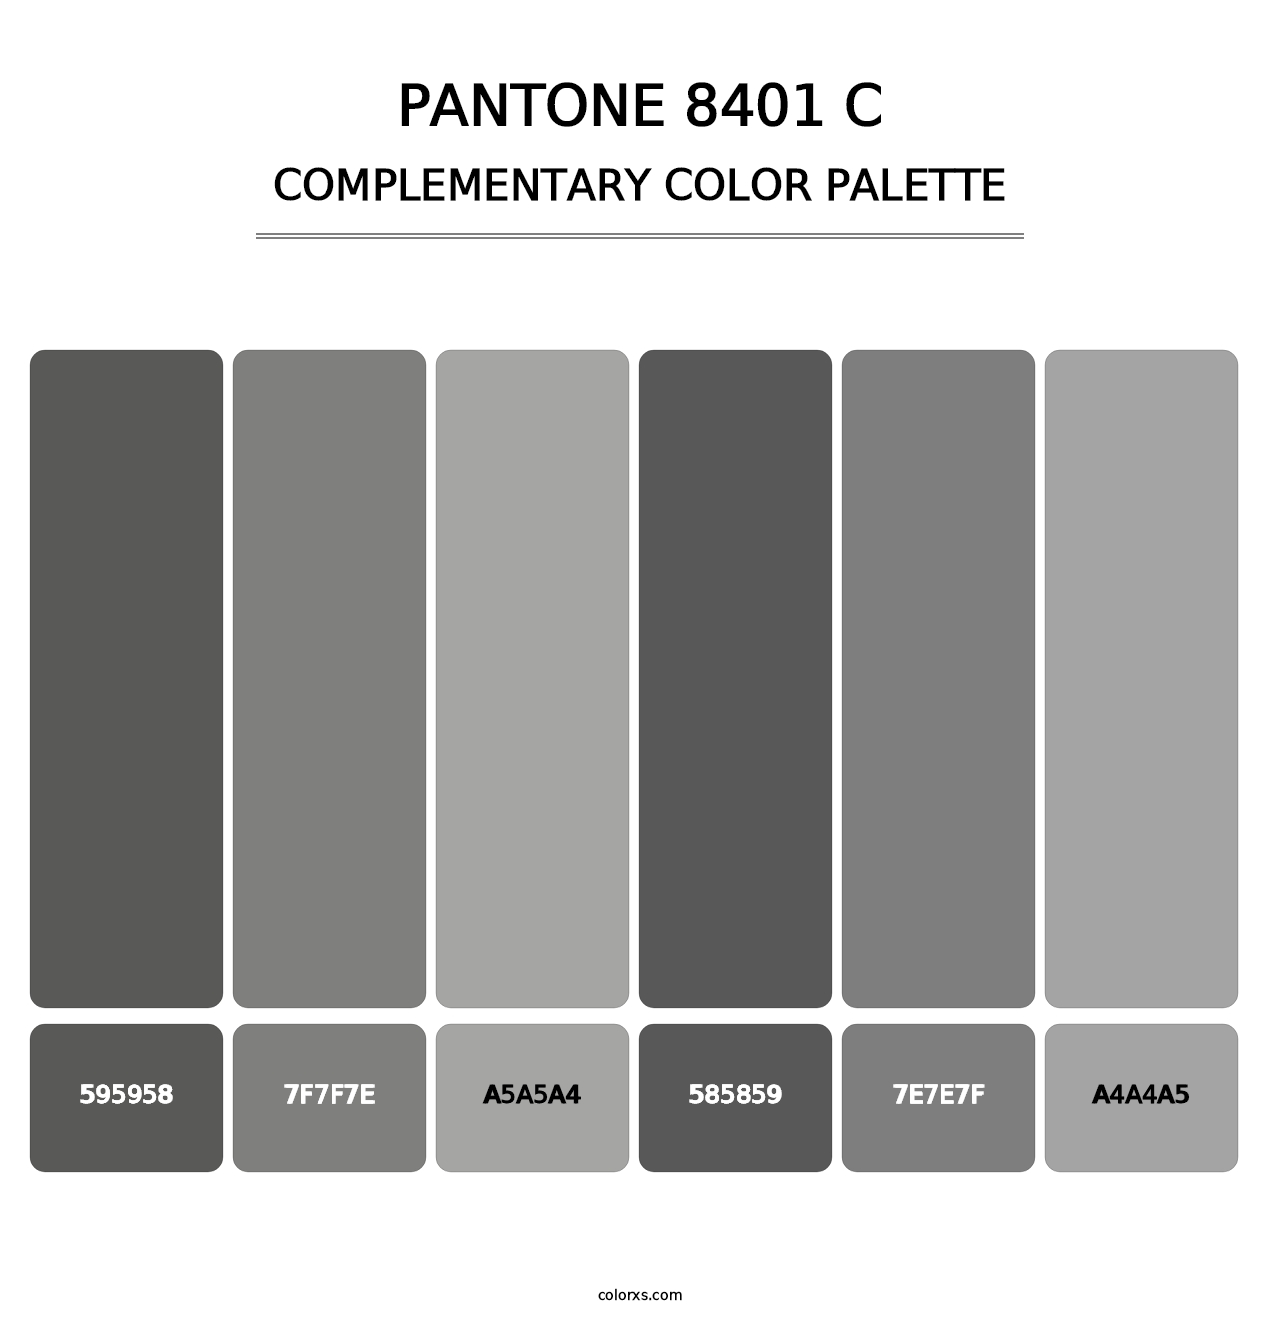 PANTONE 8401 C - Complementary Color Palette